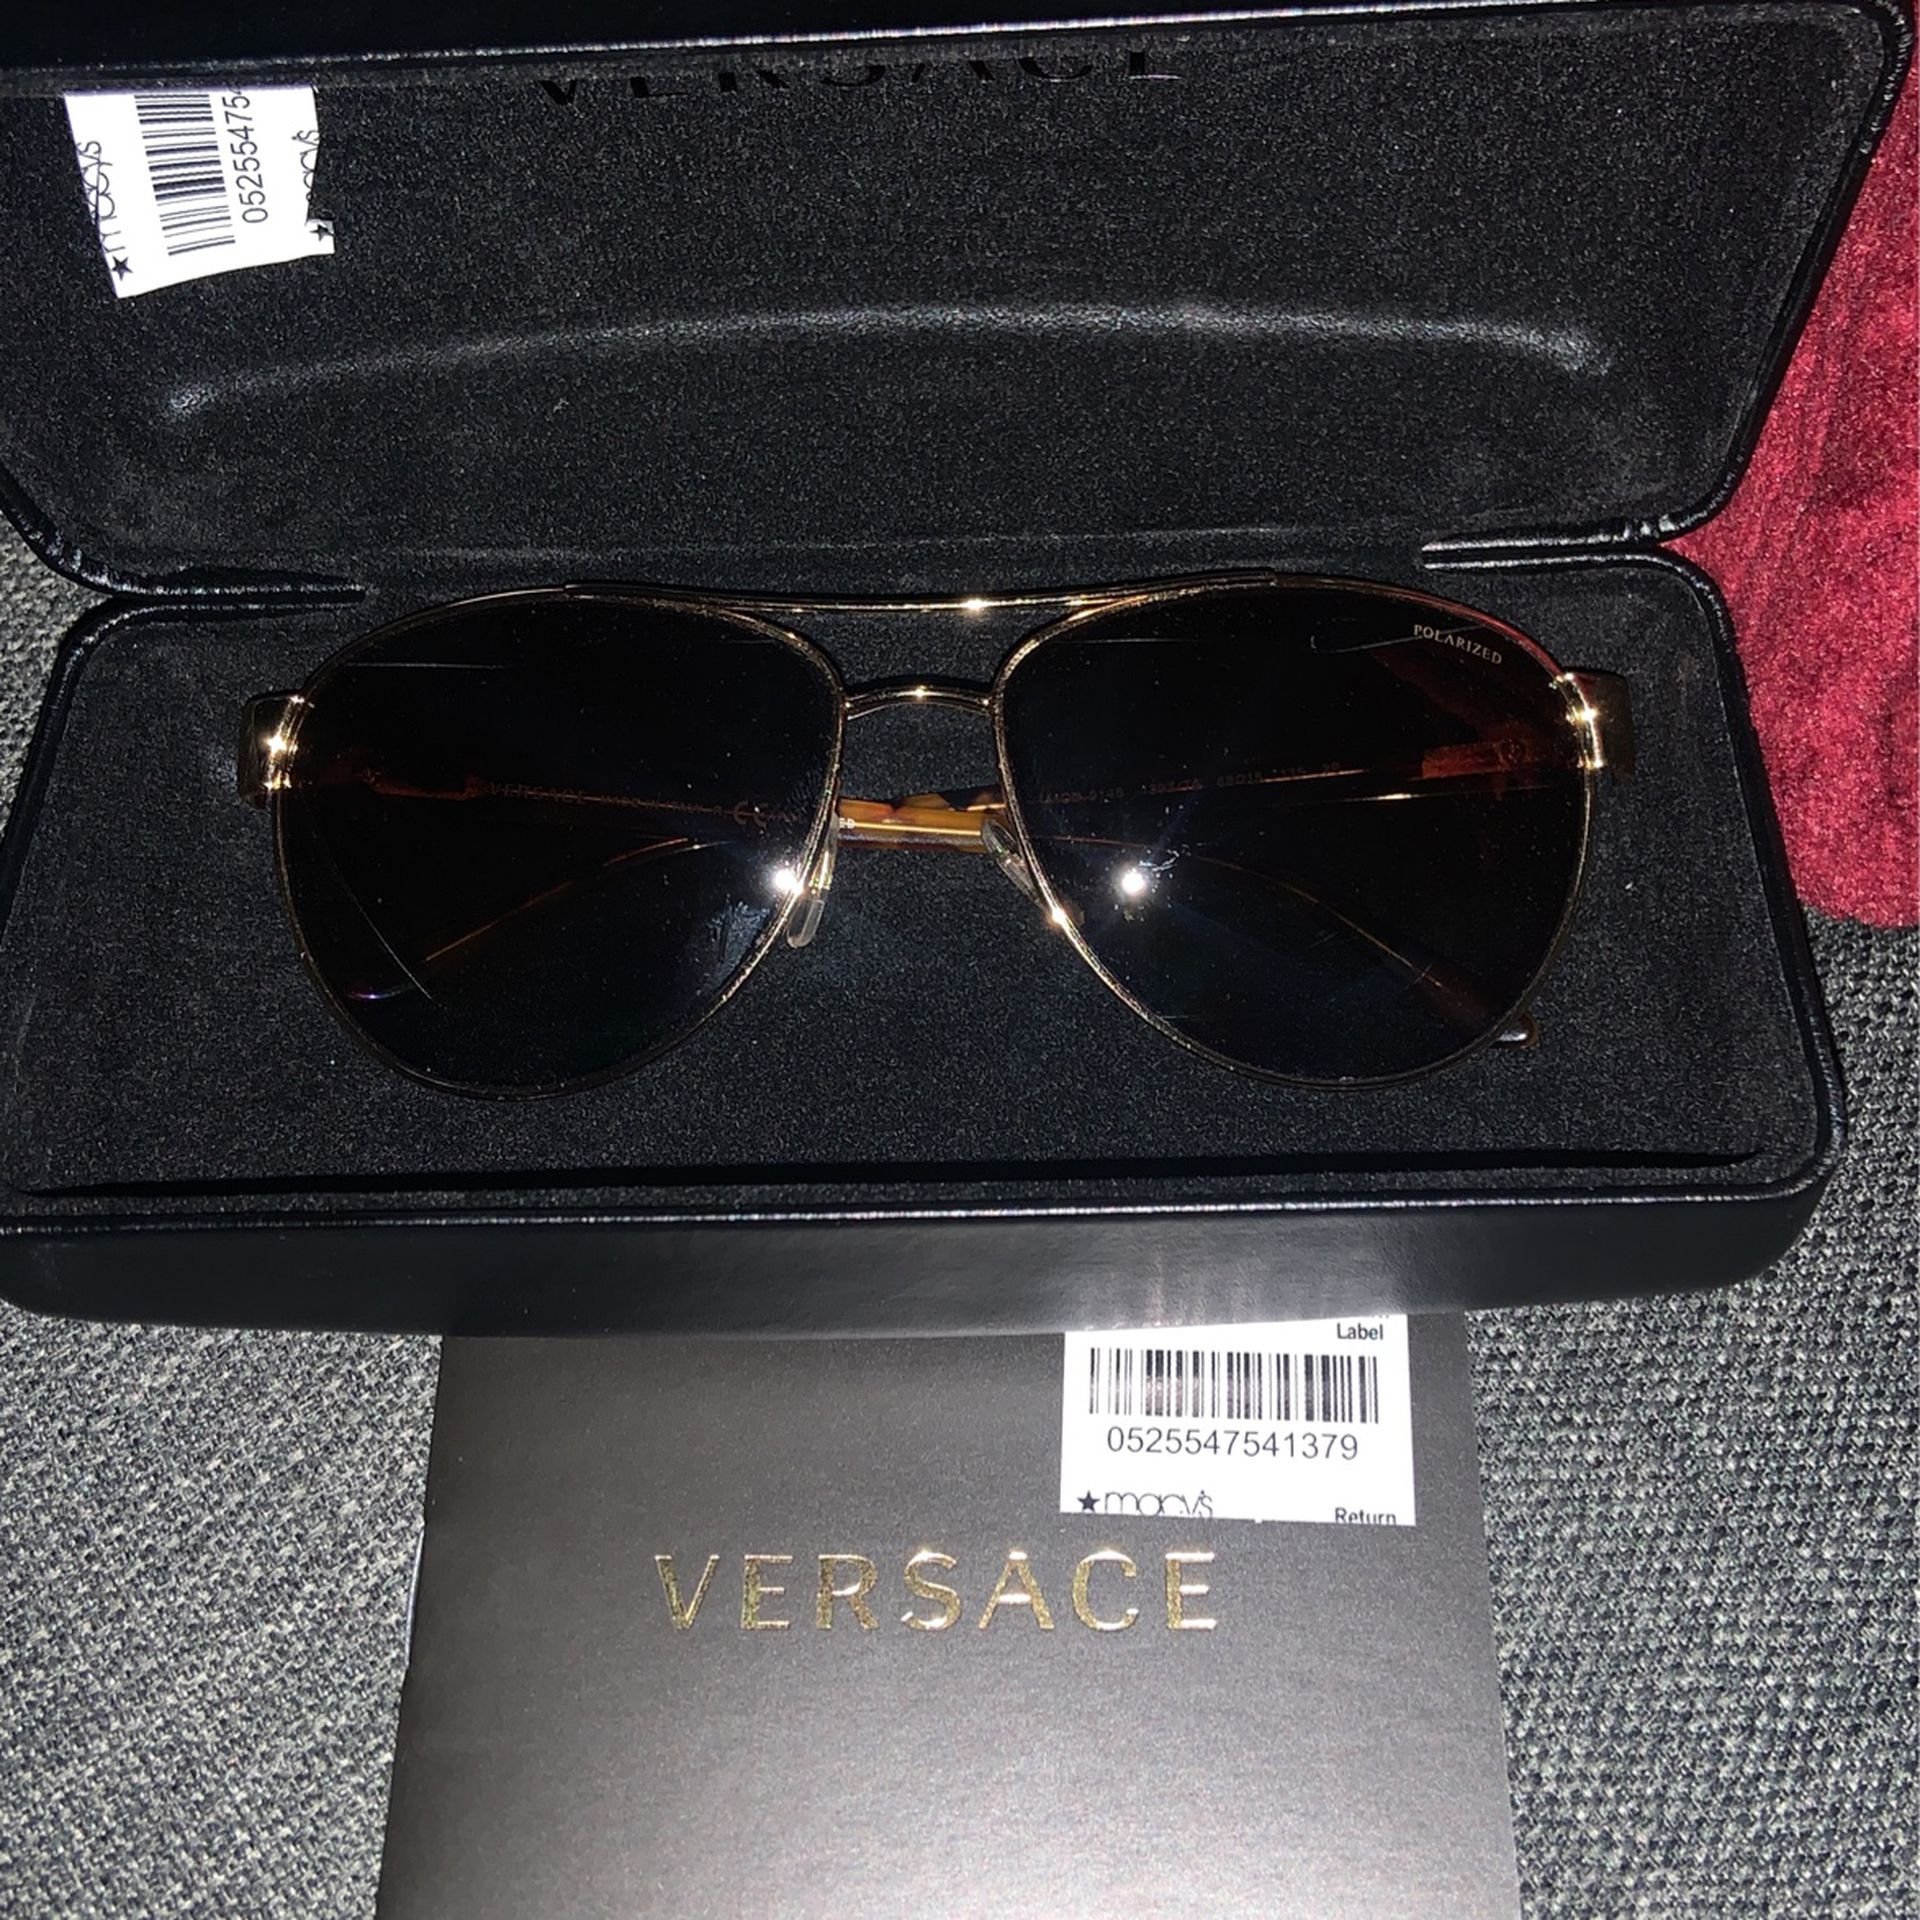 Versace Sunglasses New In Box